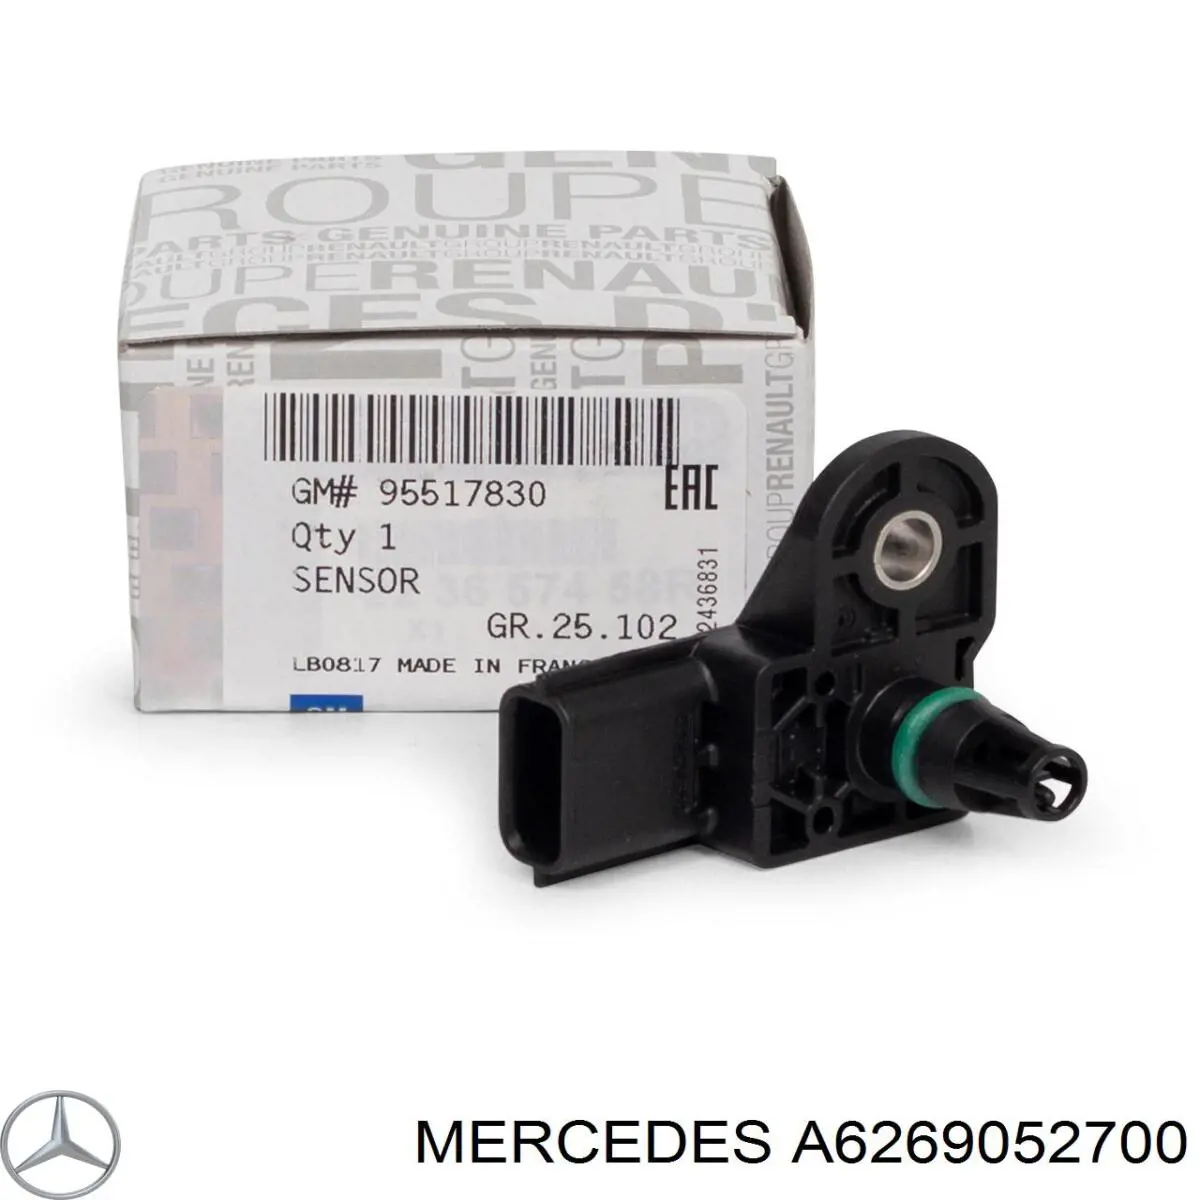 A6269052700 Mercedes датчик давления во впускном коллекторе, map